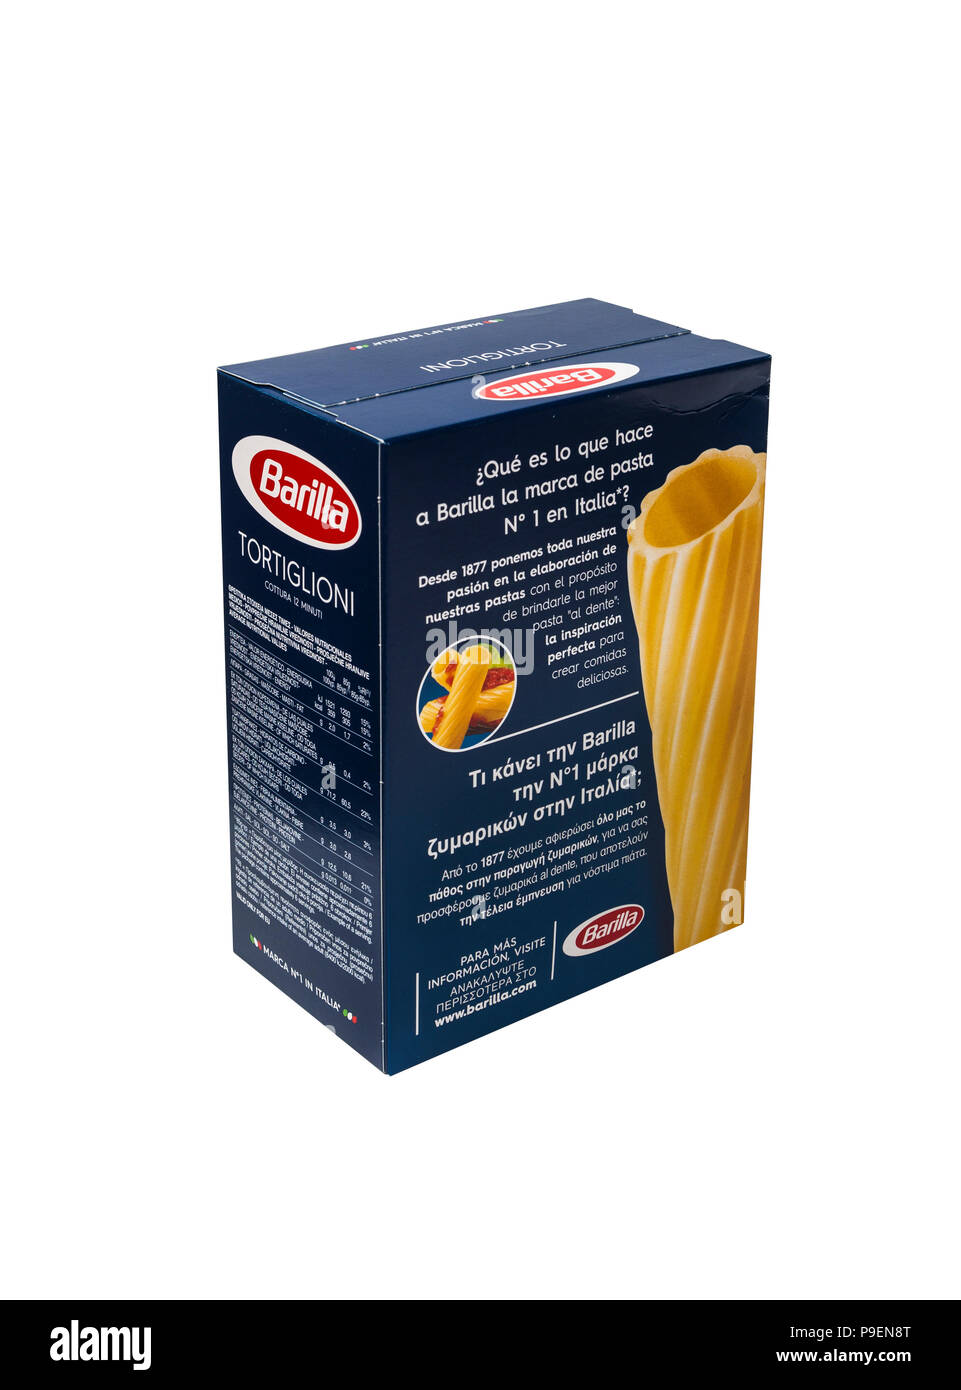 https://c8.alamy.com/comp/P9EN8T/barilla-tortiglioni-italian-pasta-in-a-box-P9EN8T.jpg